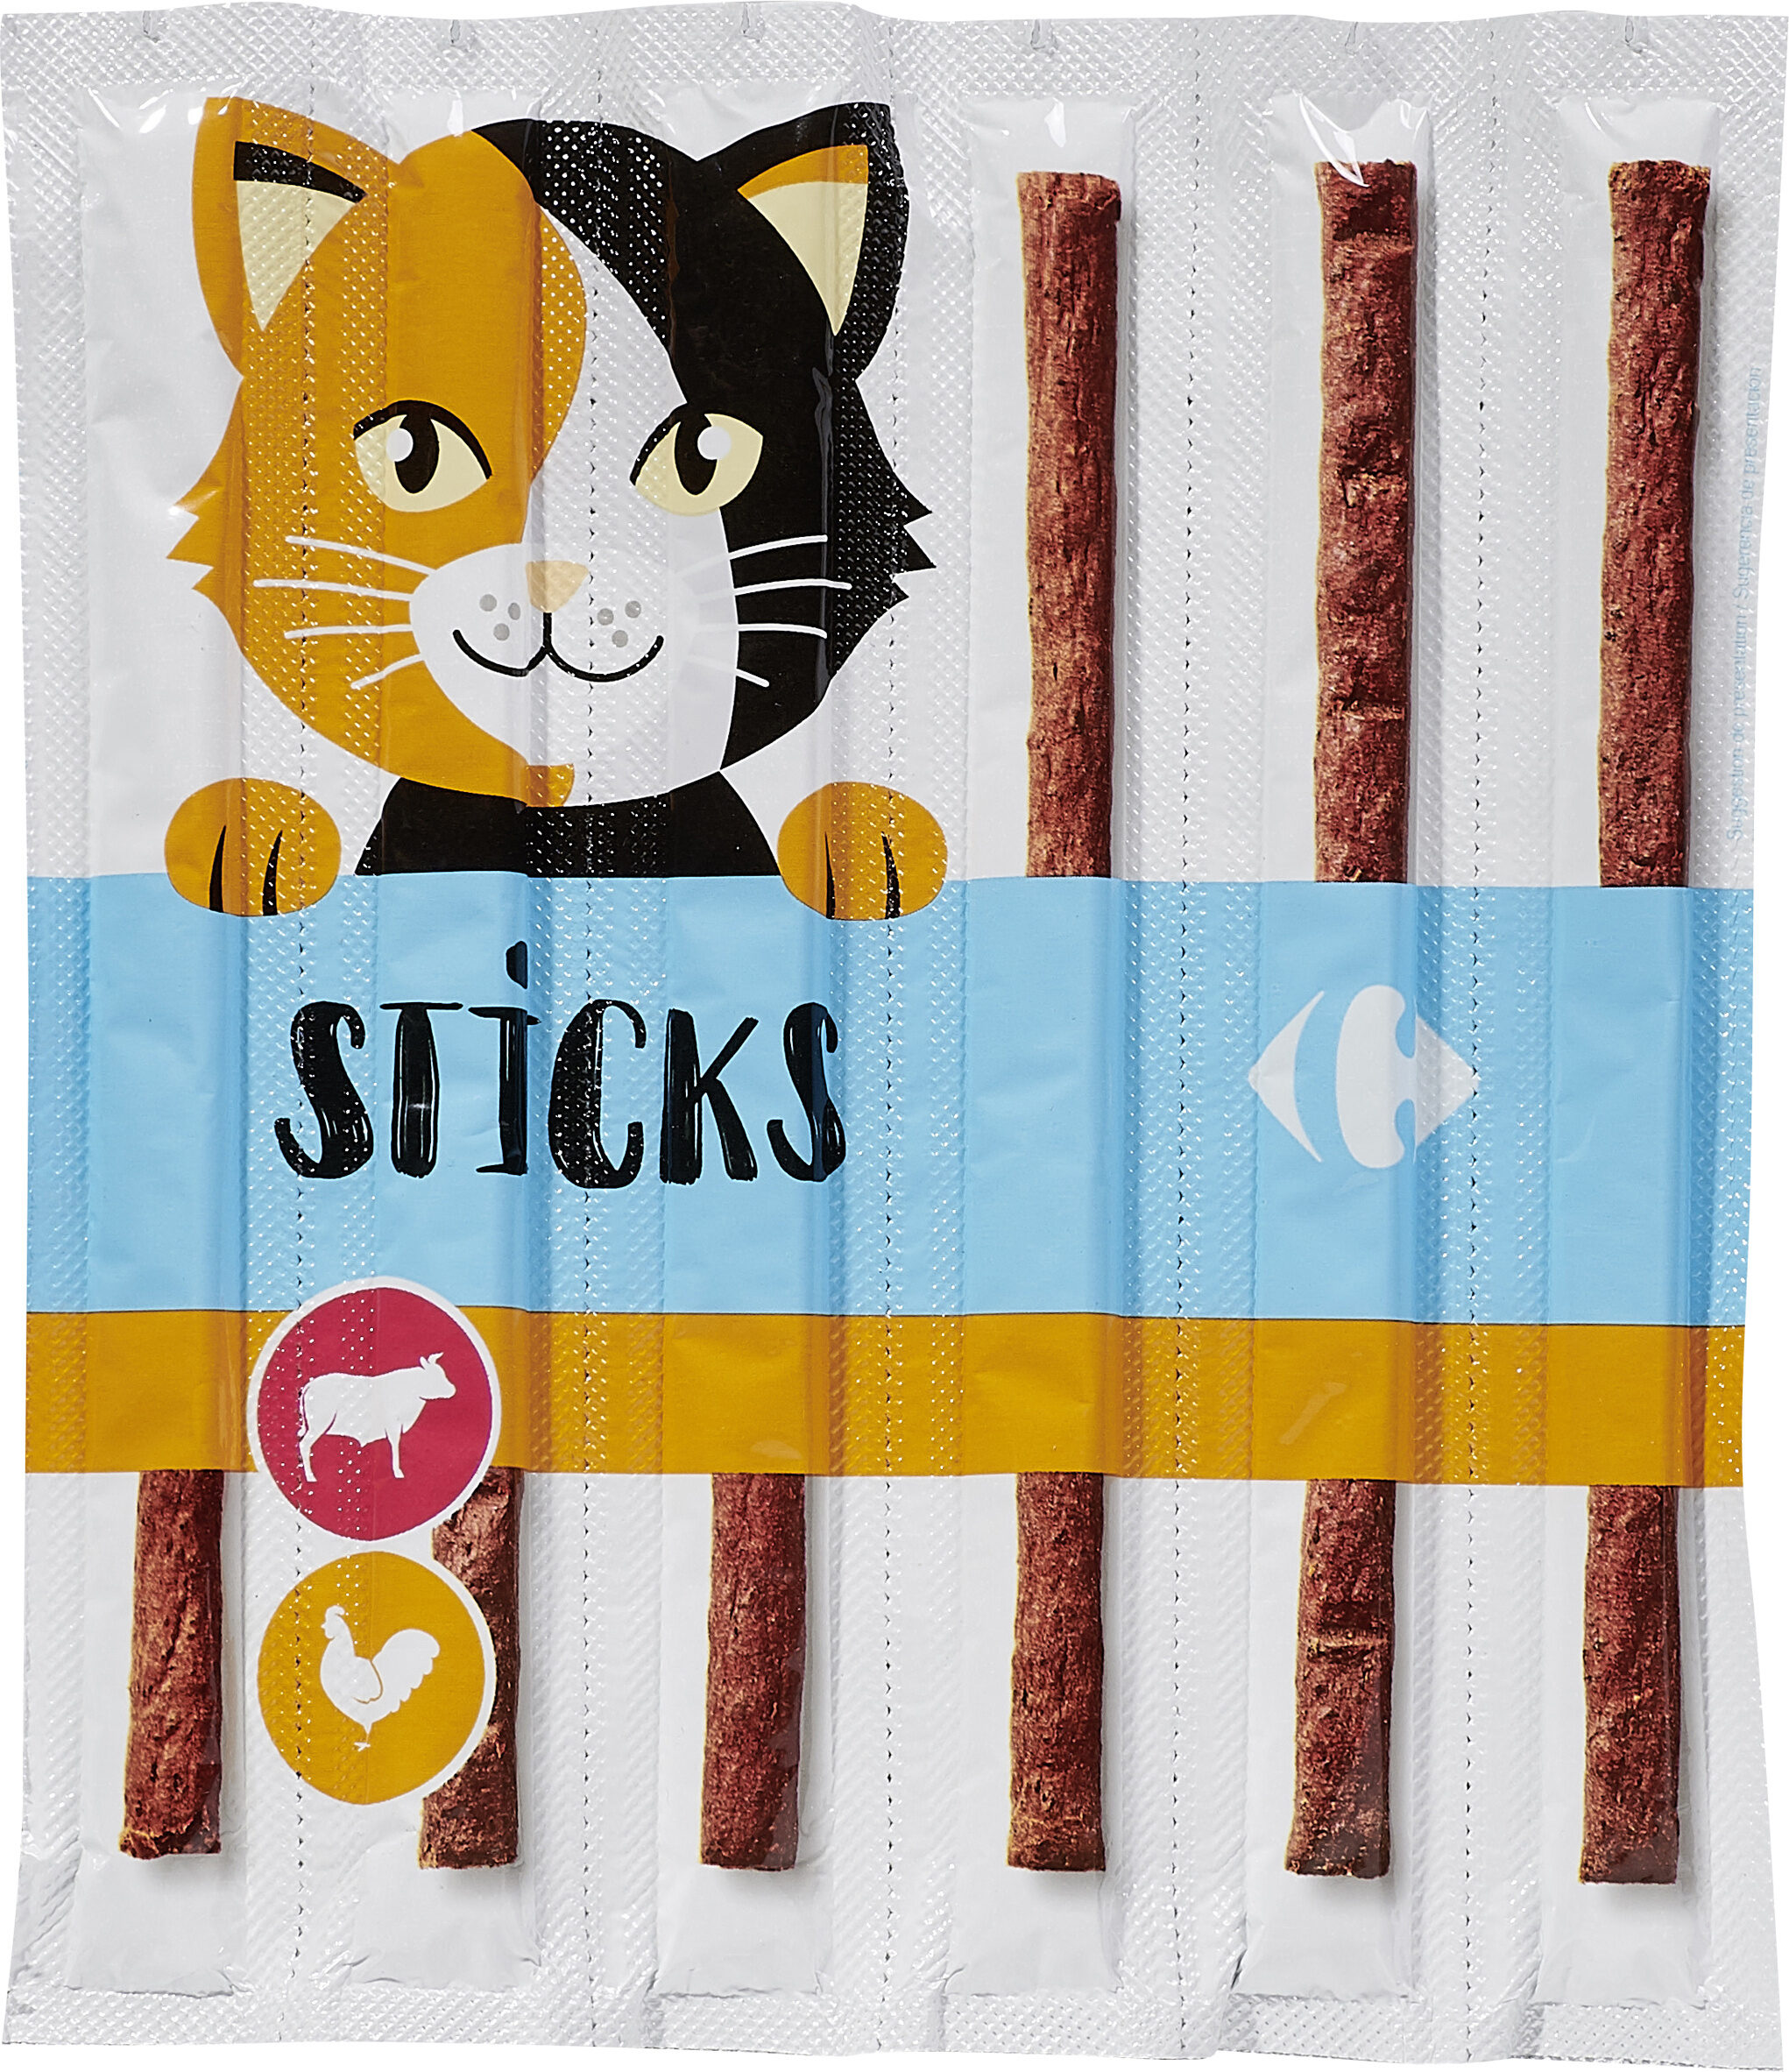 Sticks - Product - fr